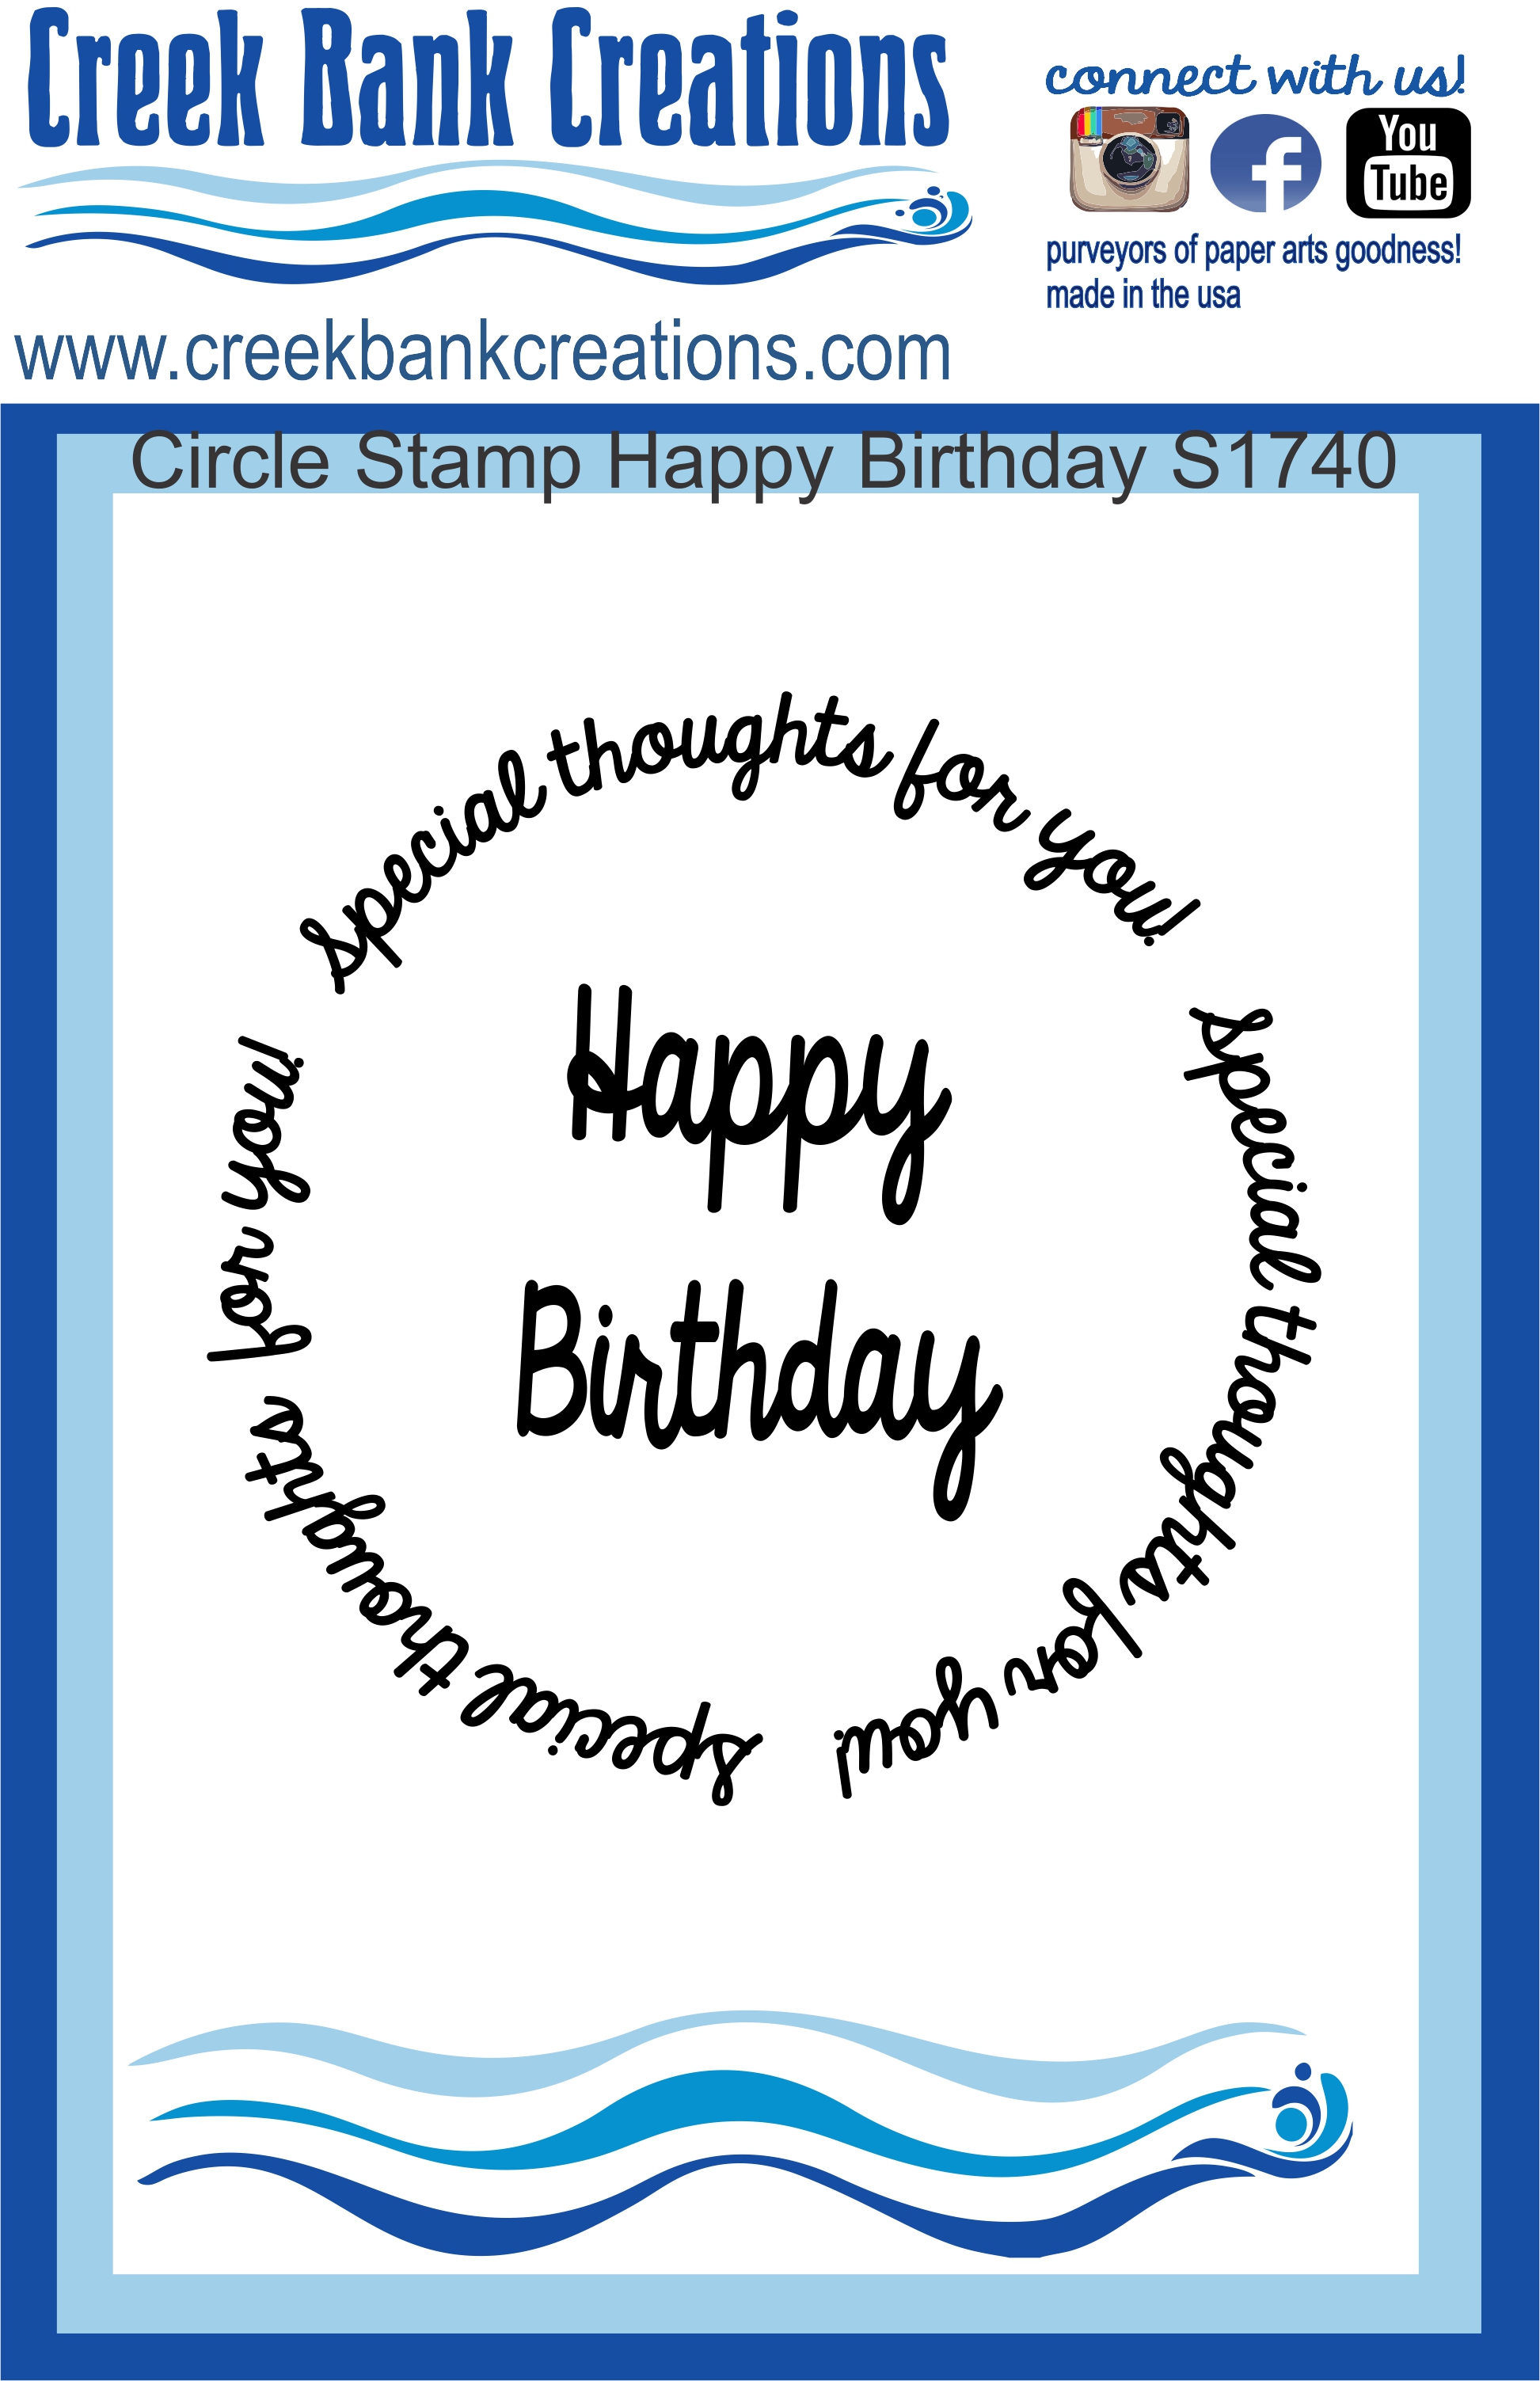 CBC Circle Stamp Happy Birthday Circle Stamp Happy Birthday S1740, spiral  pop up [CBC Circle Stamp Happy Birthday] - $7.99 : Creek Bank Creations,  Inc. 